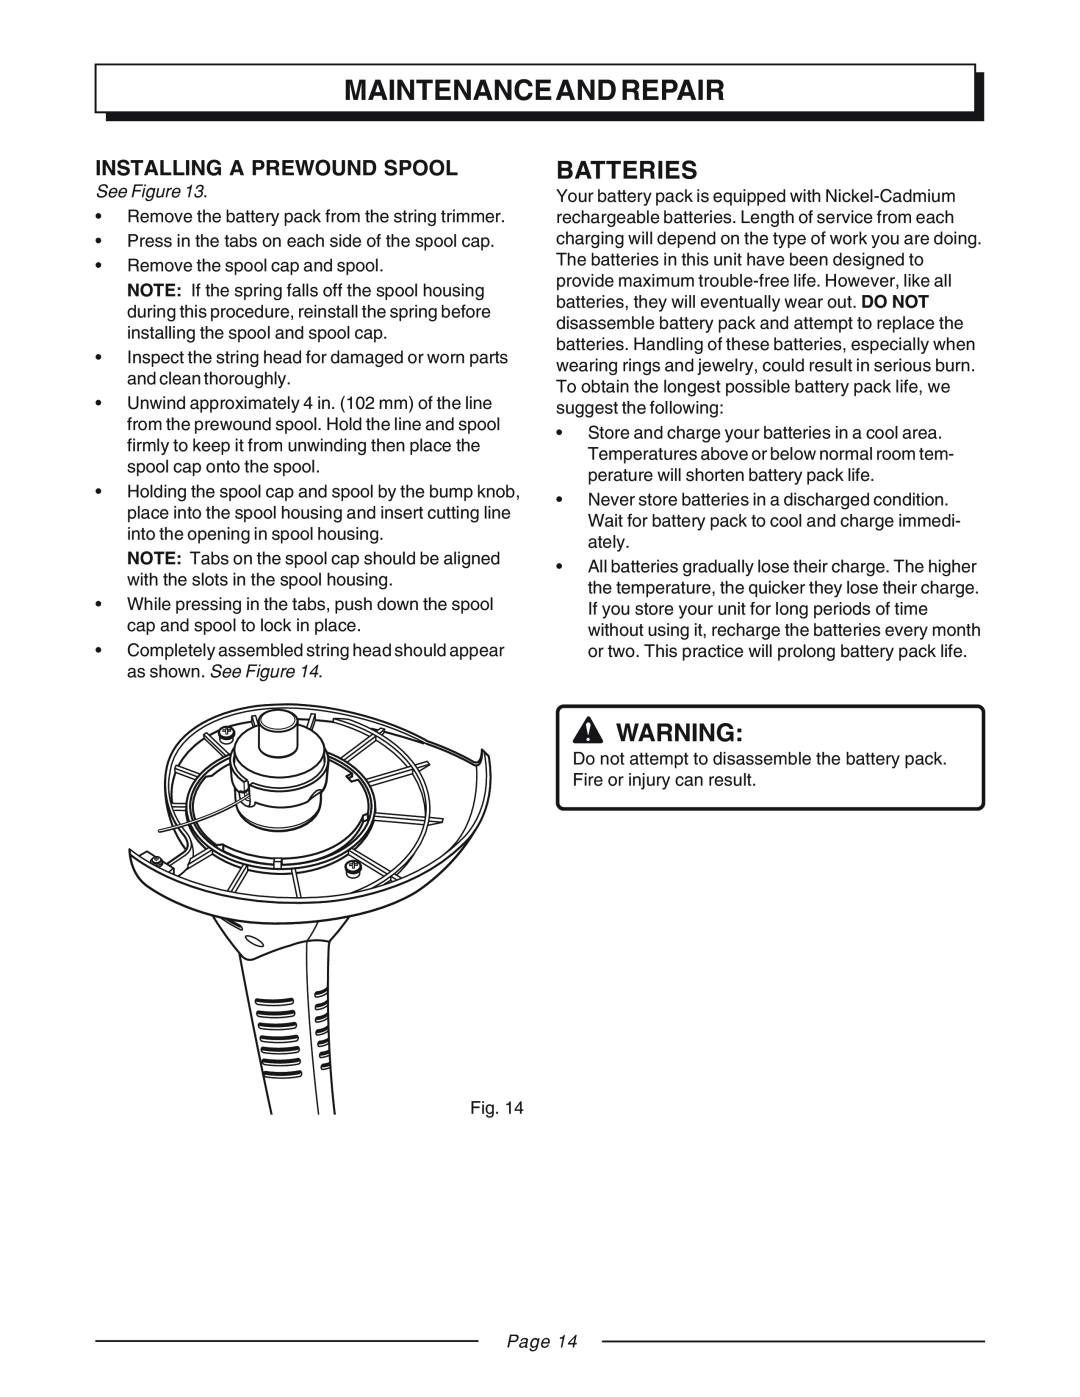 Homelite UT31810 manual Batteries, Installing A Prewound Spool, Maintenance And Repair, See Figure, Page 